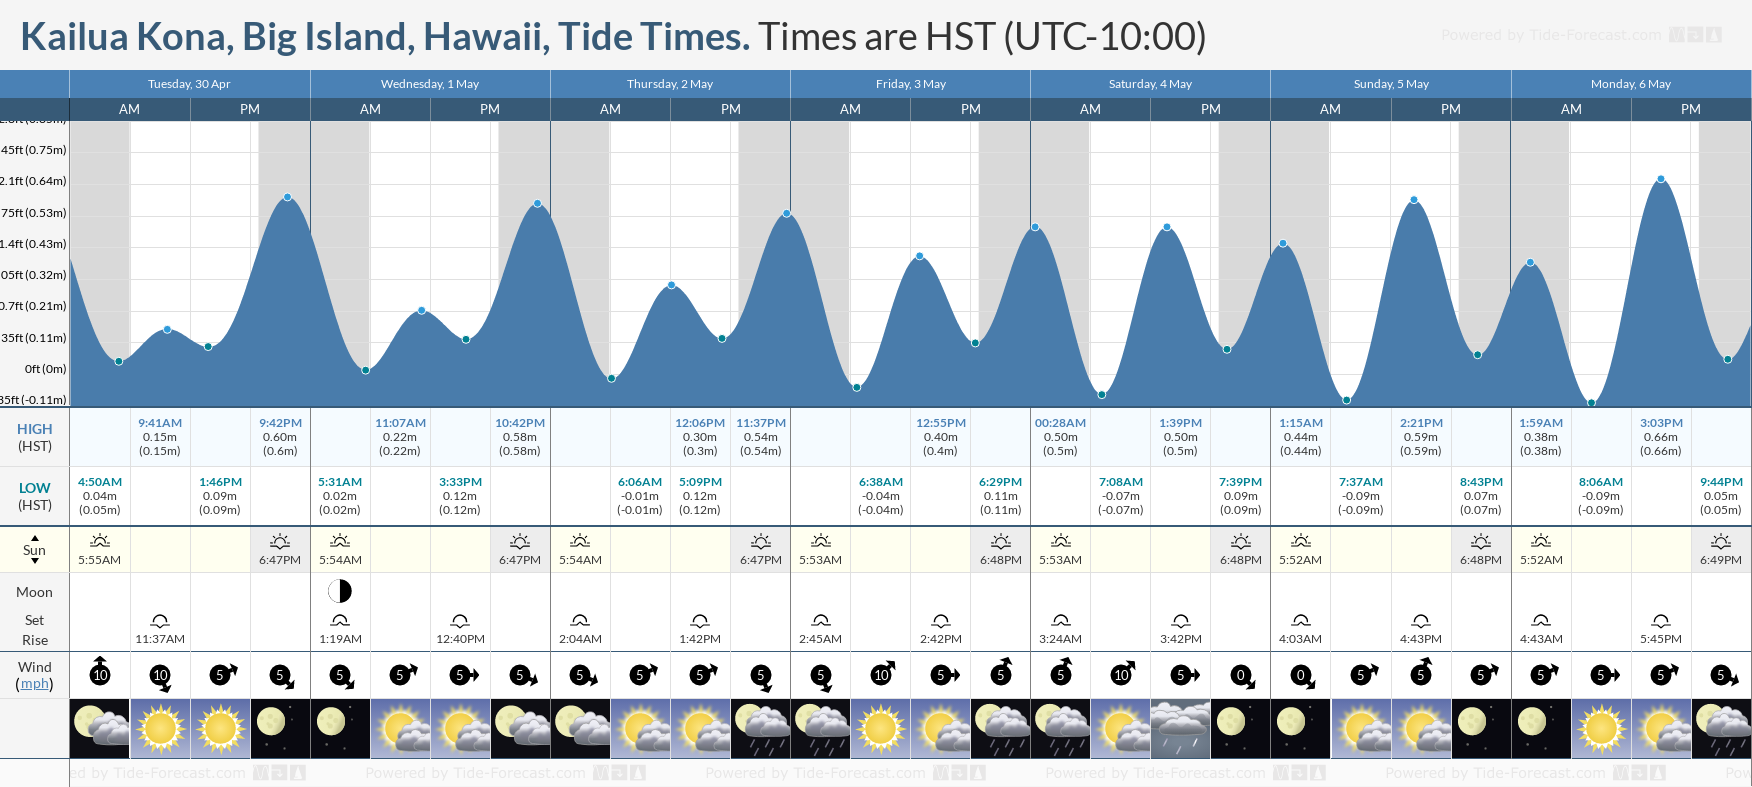 Kailua Kona, Big Island, Hawaii Tide Chart including high and low tide times for the next 7 days